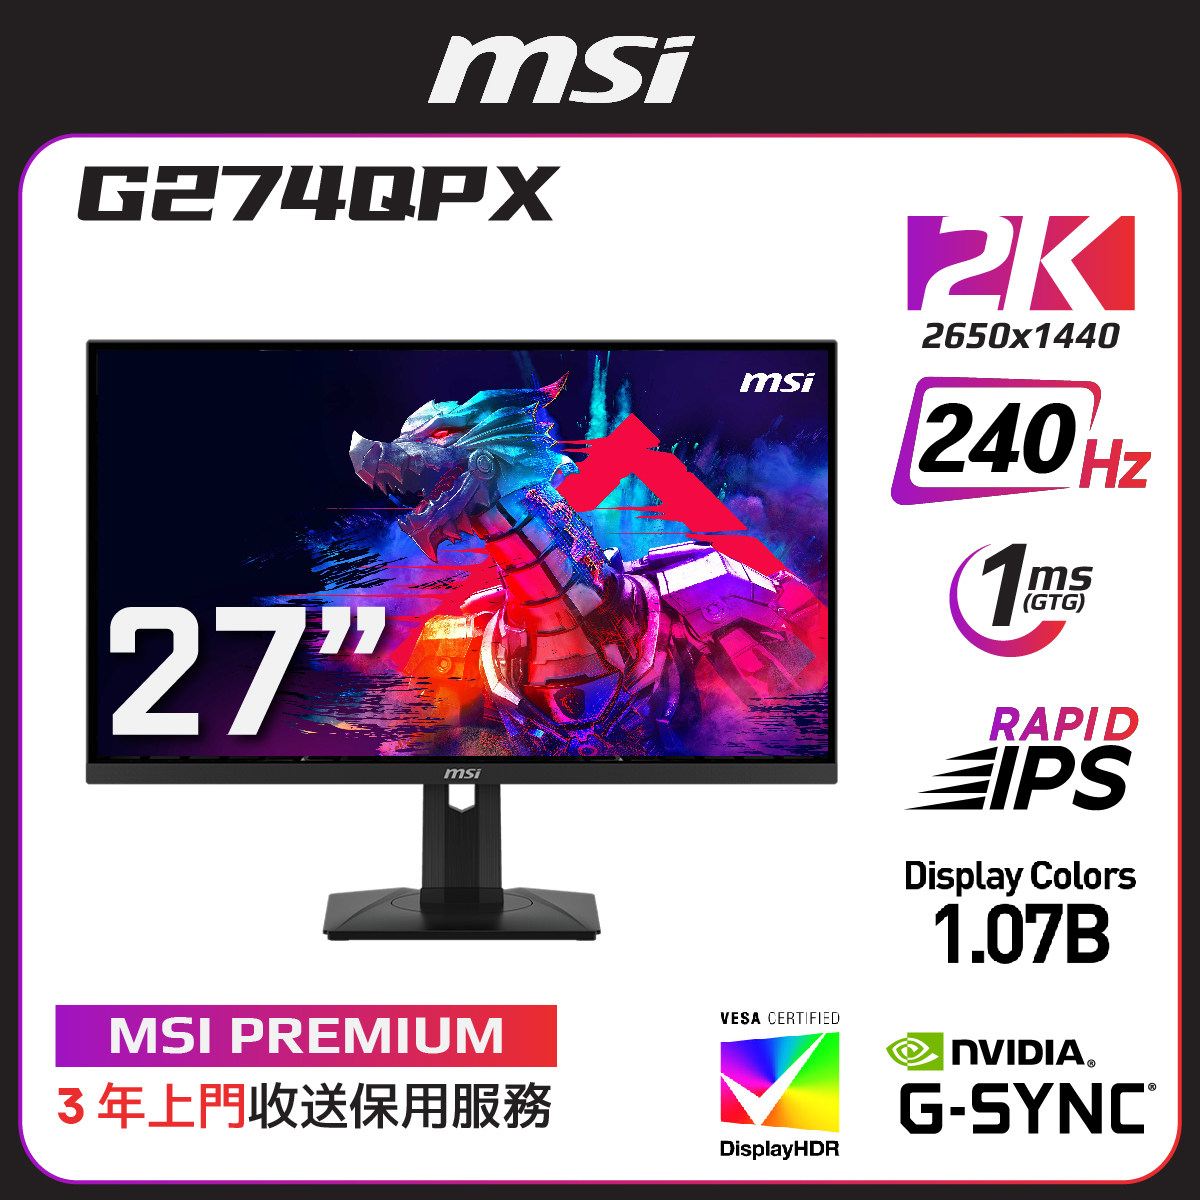 MSI 微星 G274QPX 電競顯示器 (27吋 / WQHD / 240Hz / RAPID IPS / HDR / G-sync Compatible) - 2560 x 1440